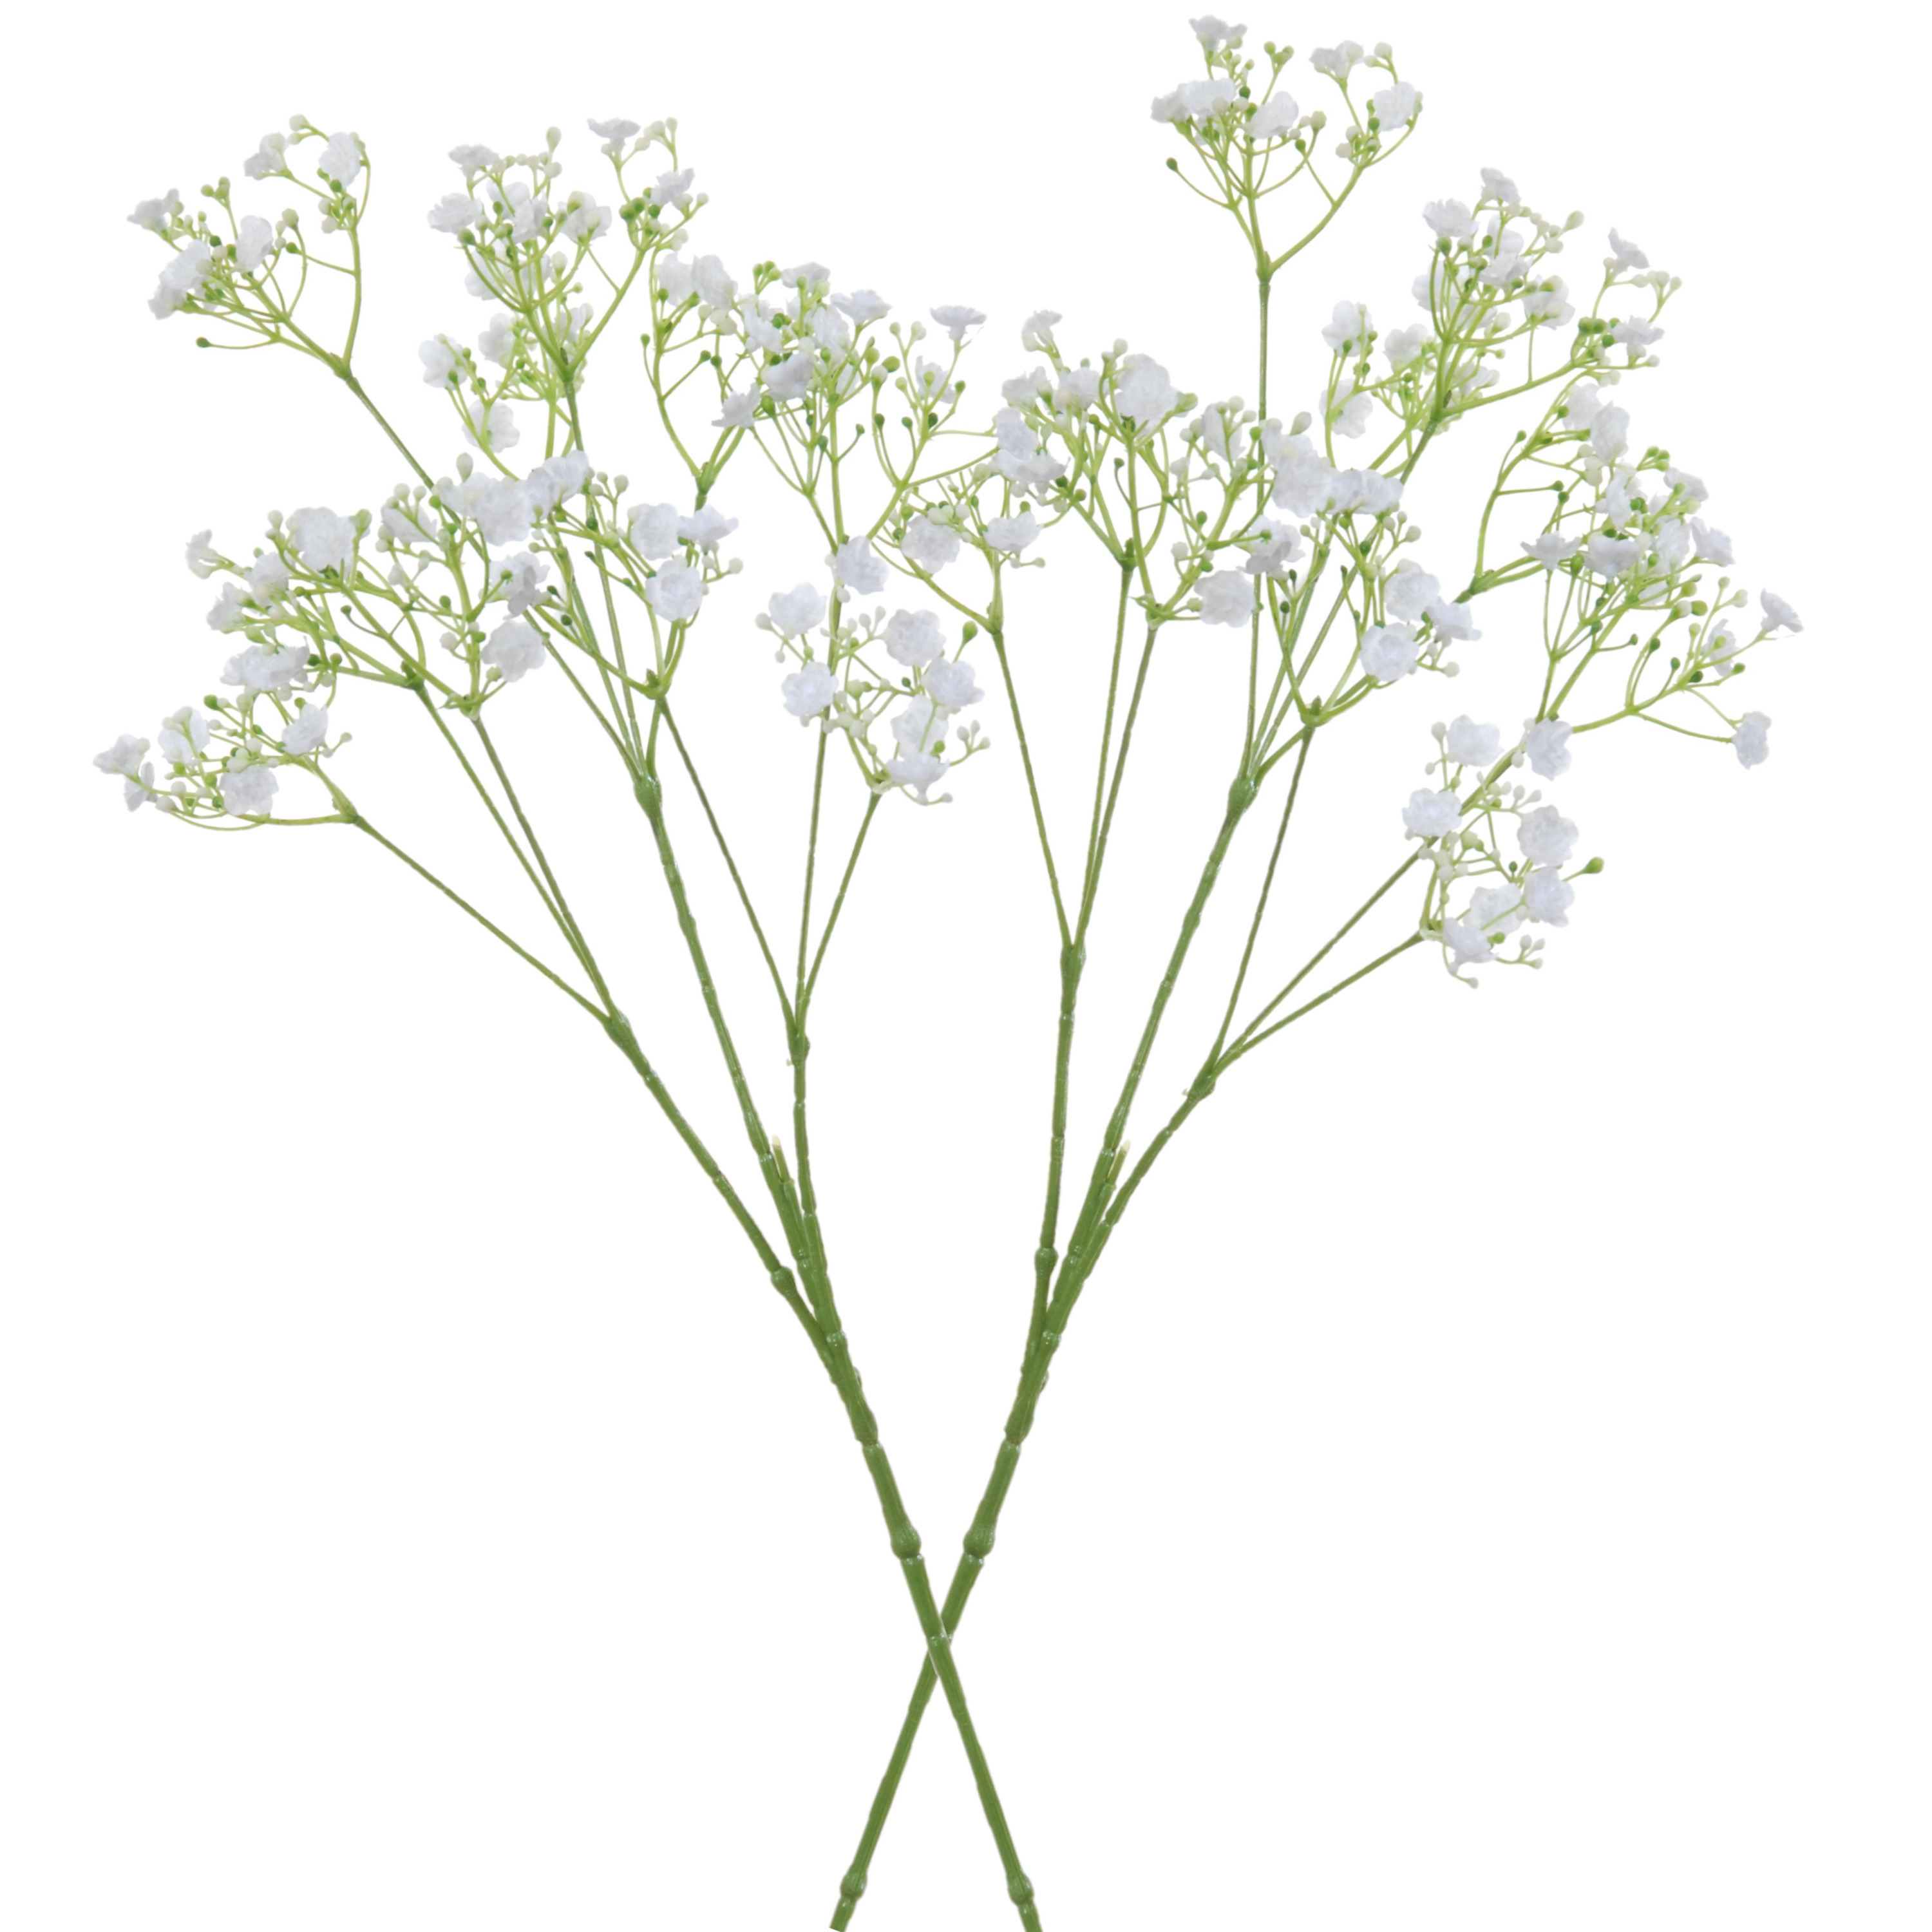 3x stuks kunstbloemen Gipskruid/Gypsophila takken wit 70 cm -